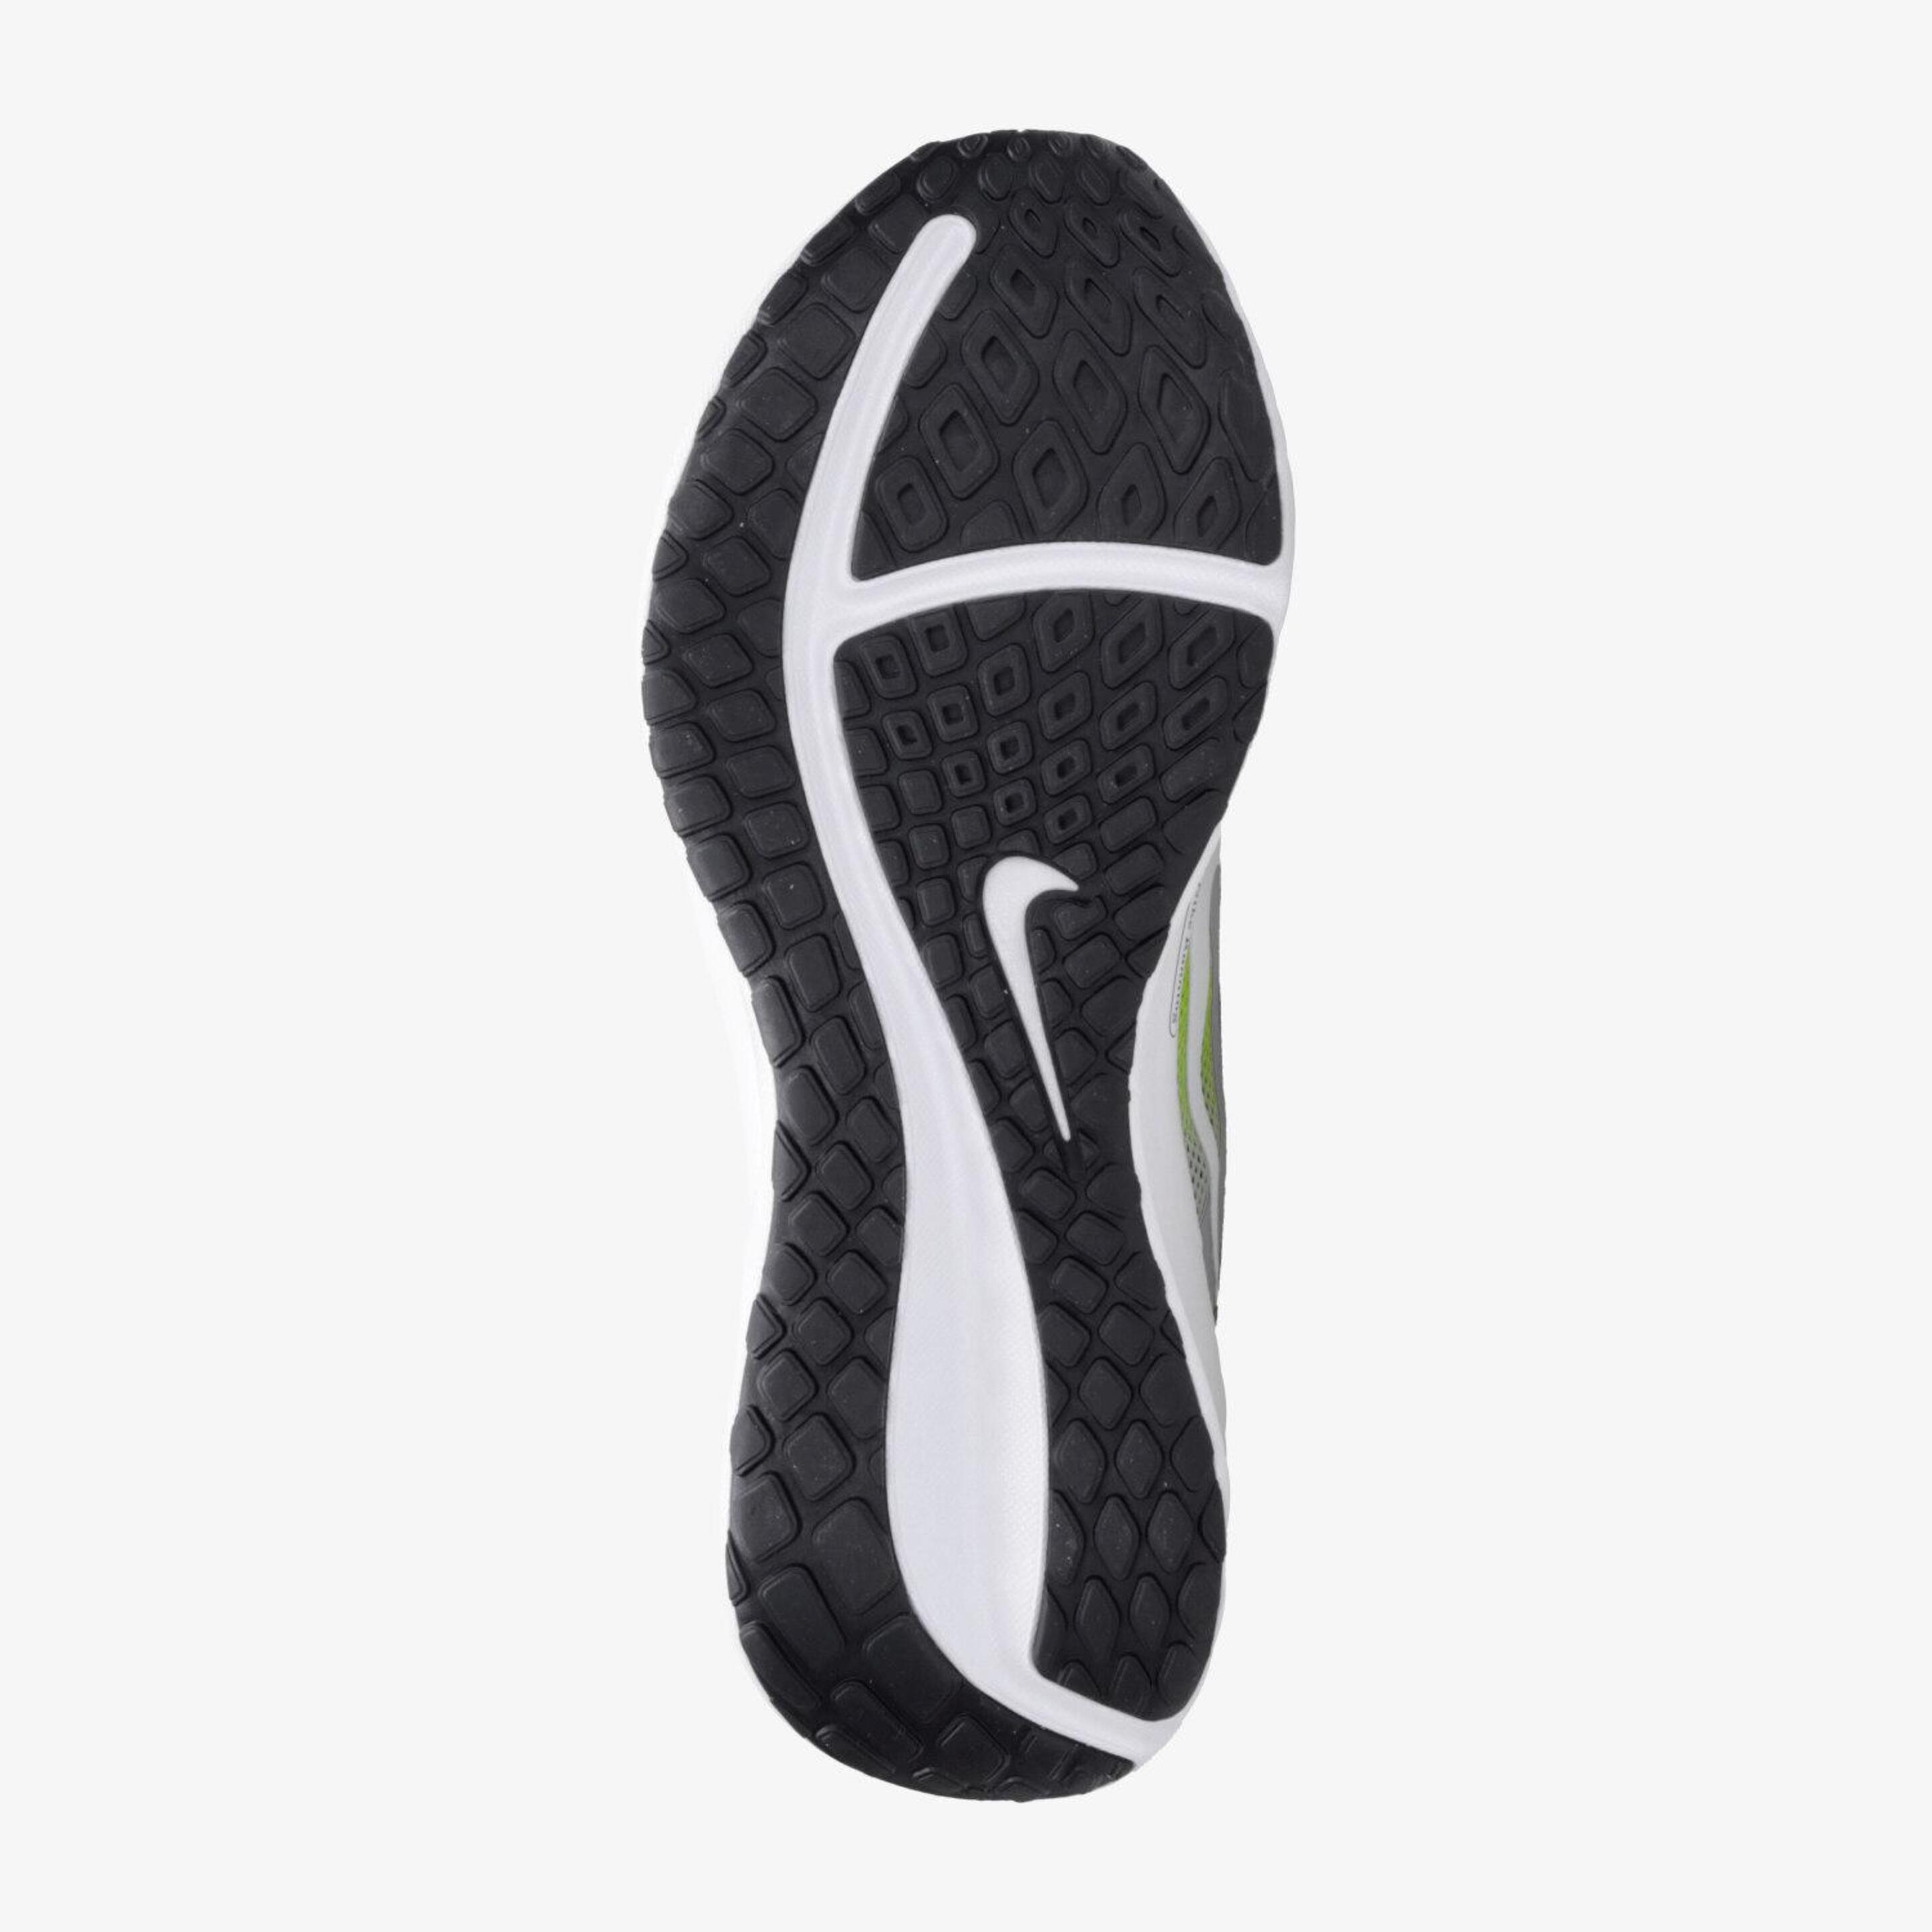 Nike Downshifter 13 - Gris - Zapatillas Running Hombre